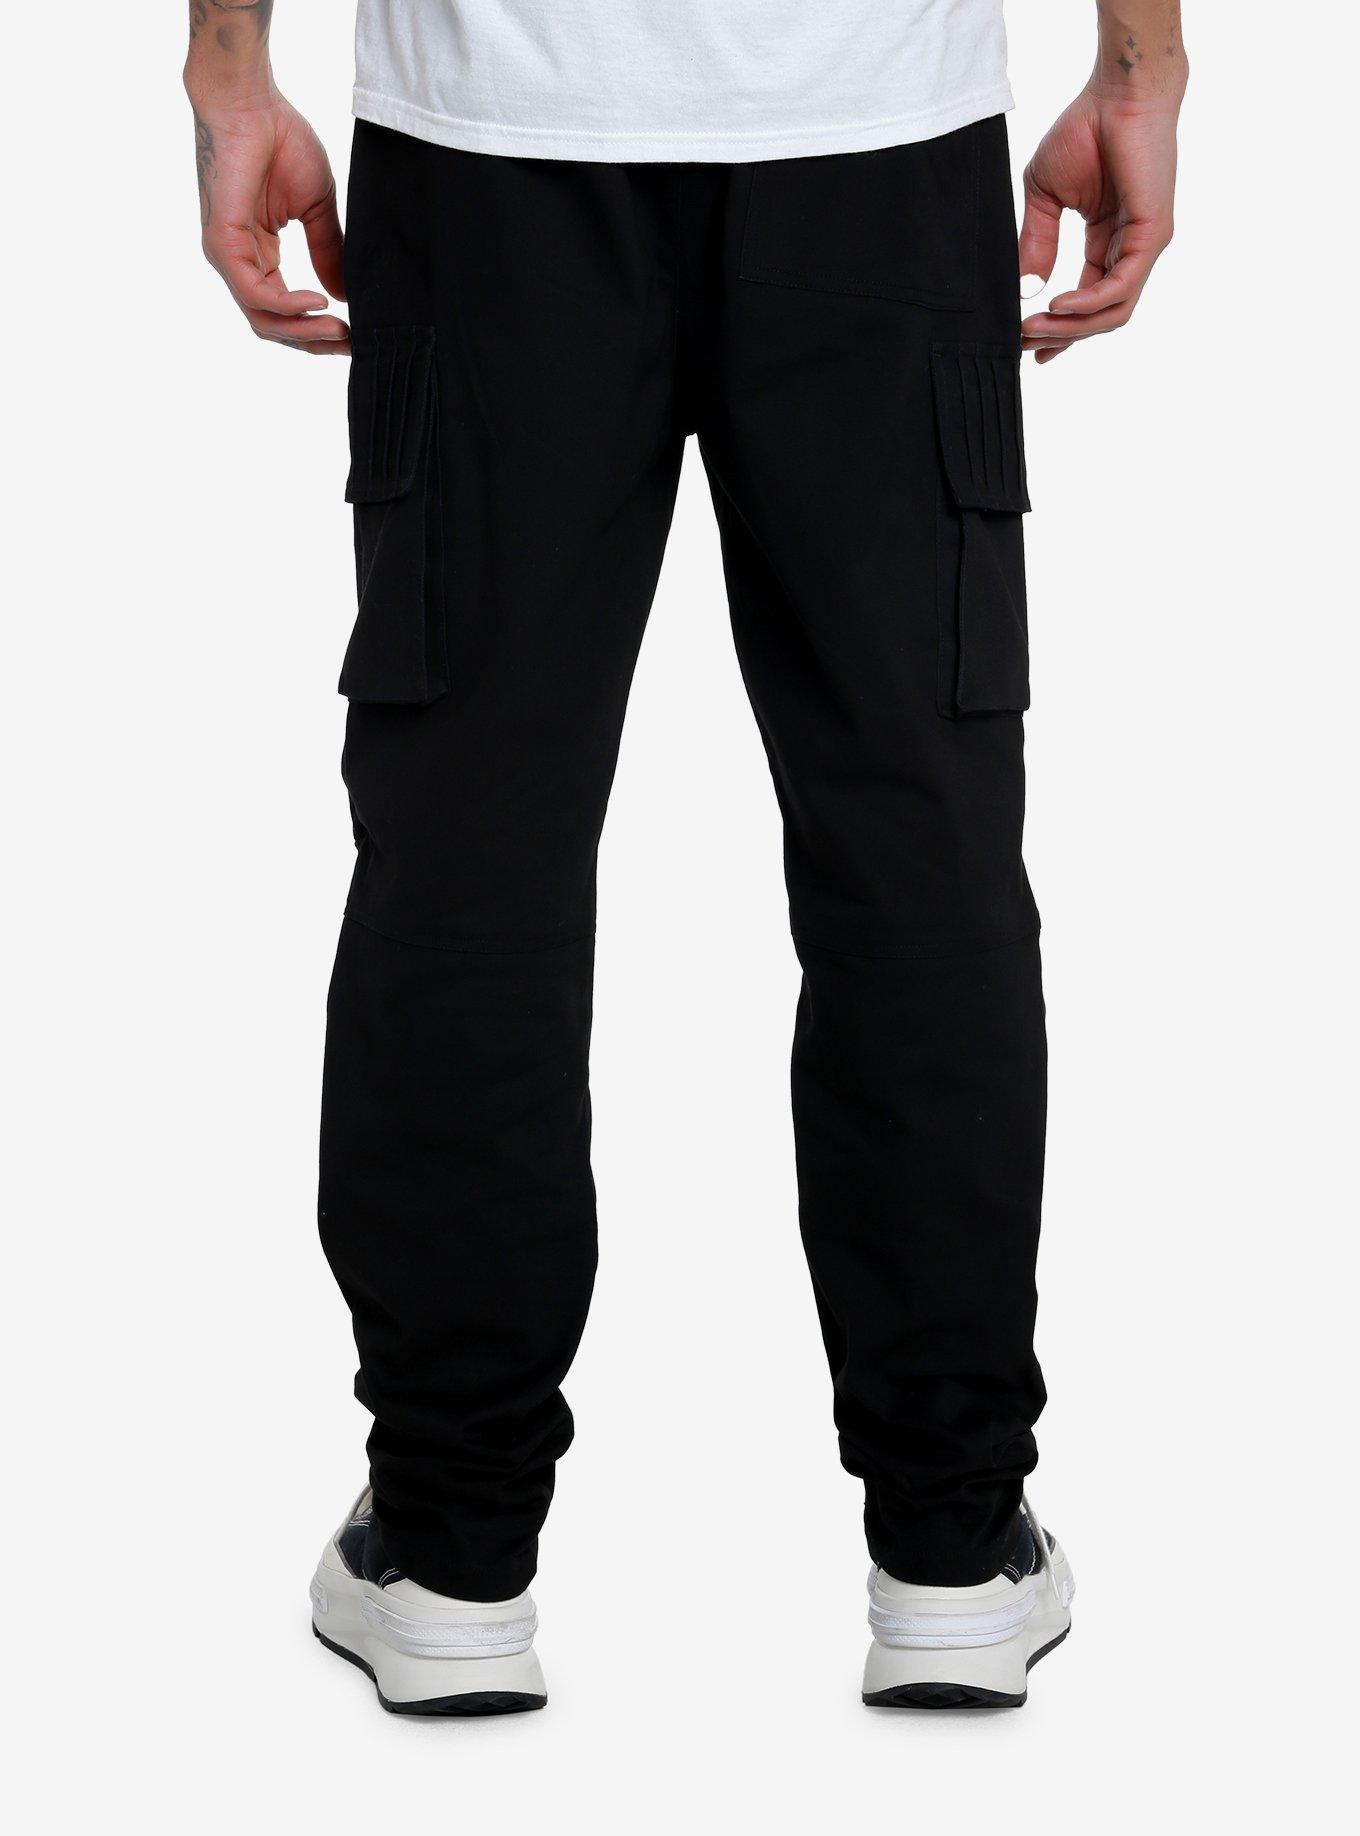 Black Stitched Cargo Pants, BLACK, alternate